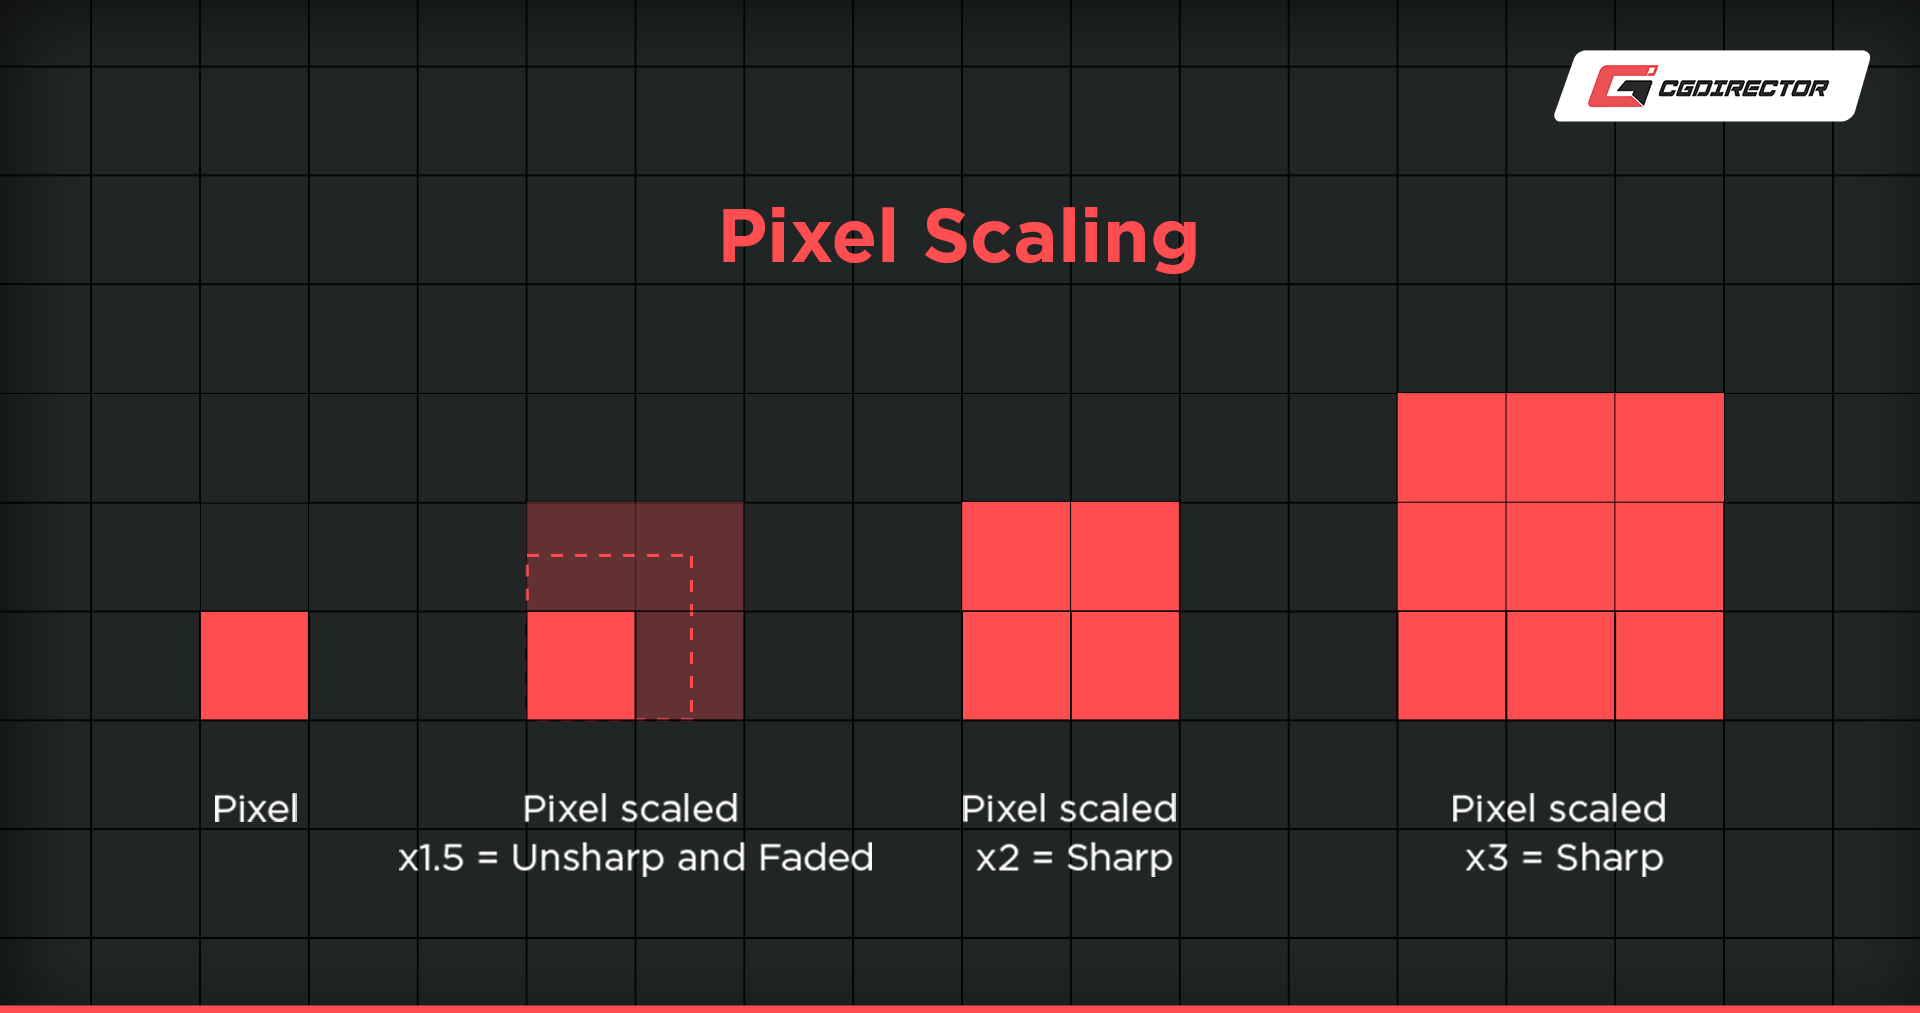 Pixel Scaling in Monitors